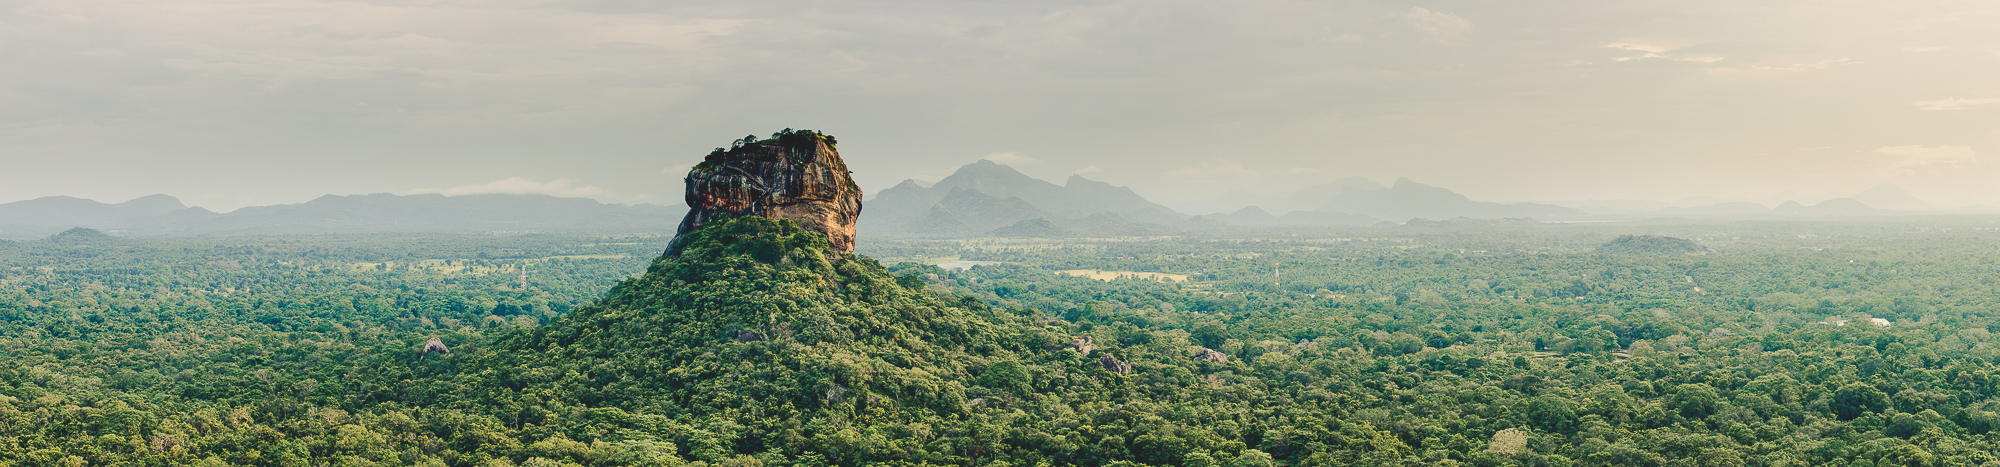 Landscape of Sri Lanka Lion Rock